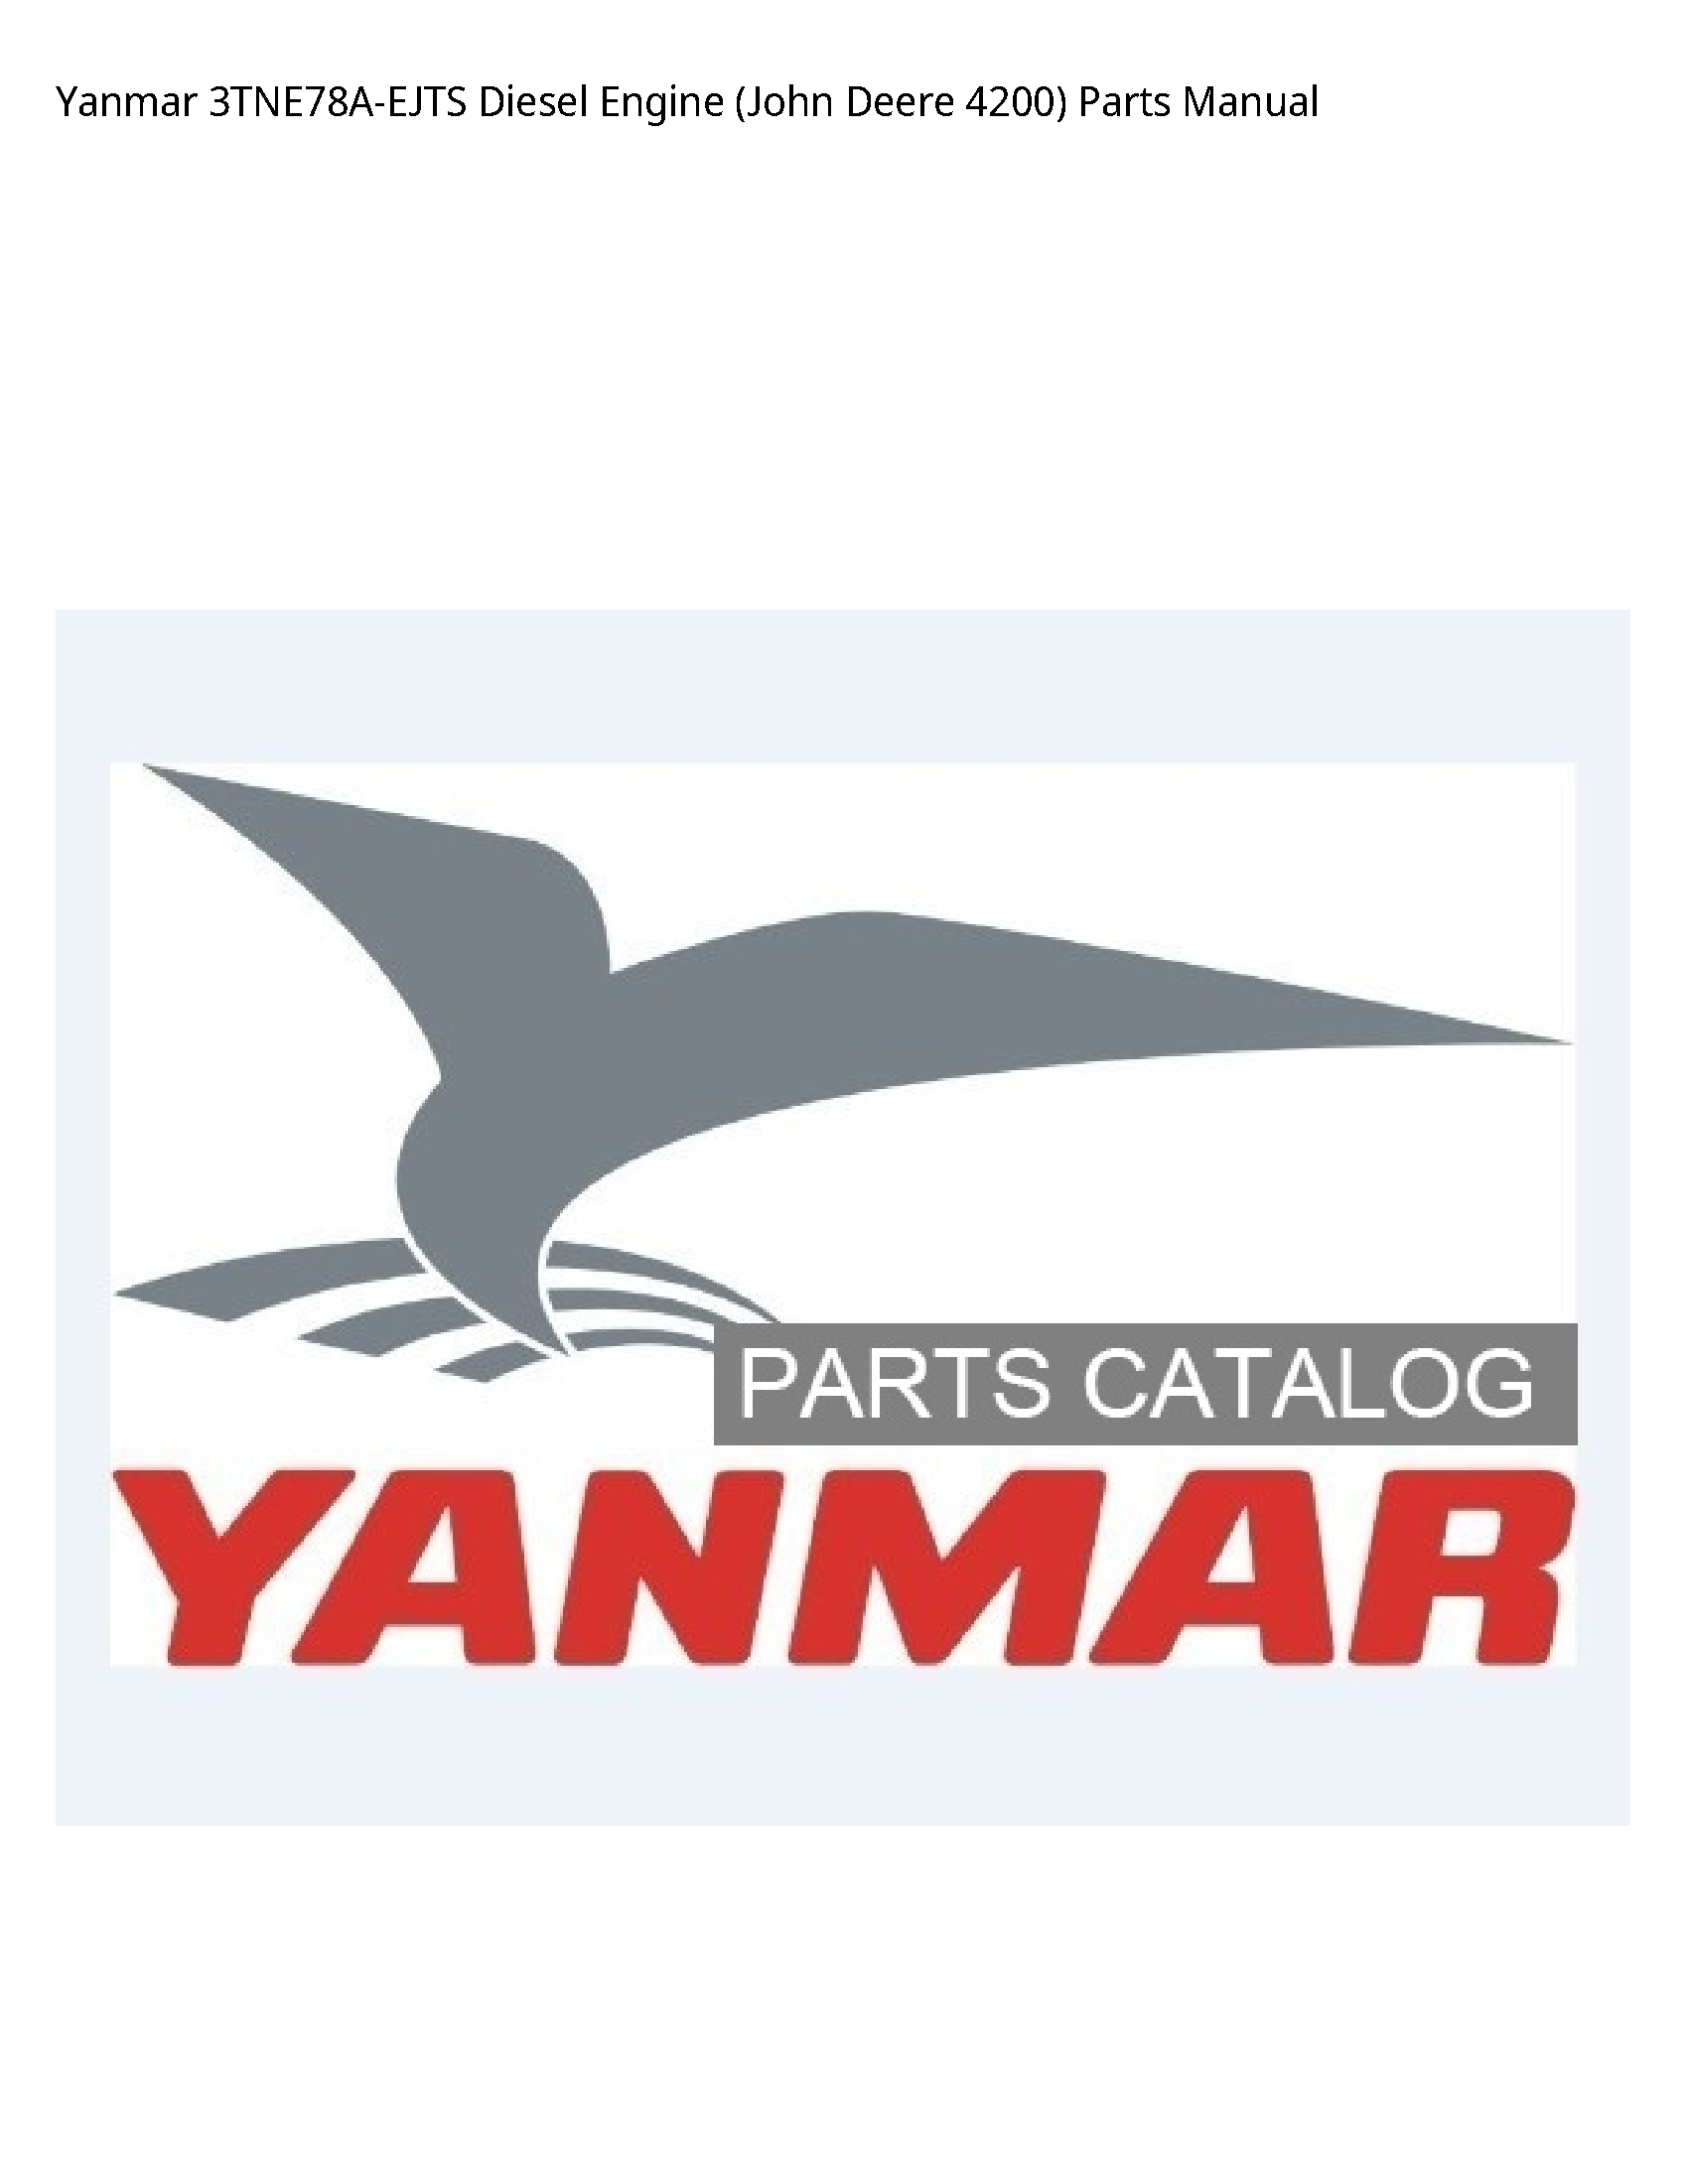 Yanmar 3TNE78A-EJTS Diesel Engine (John Deere Parts manual